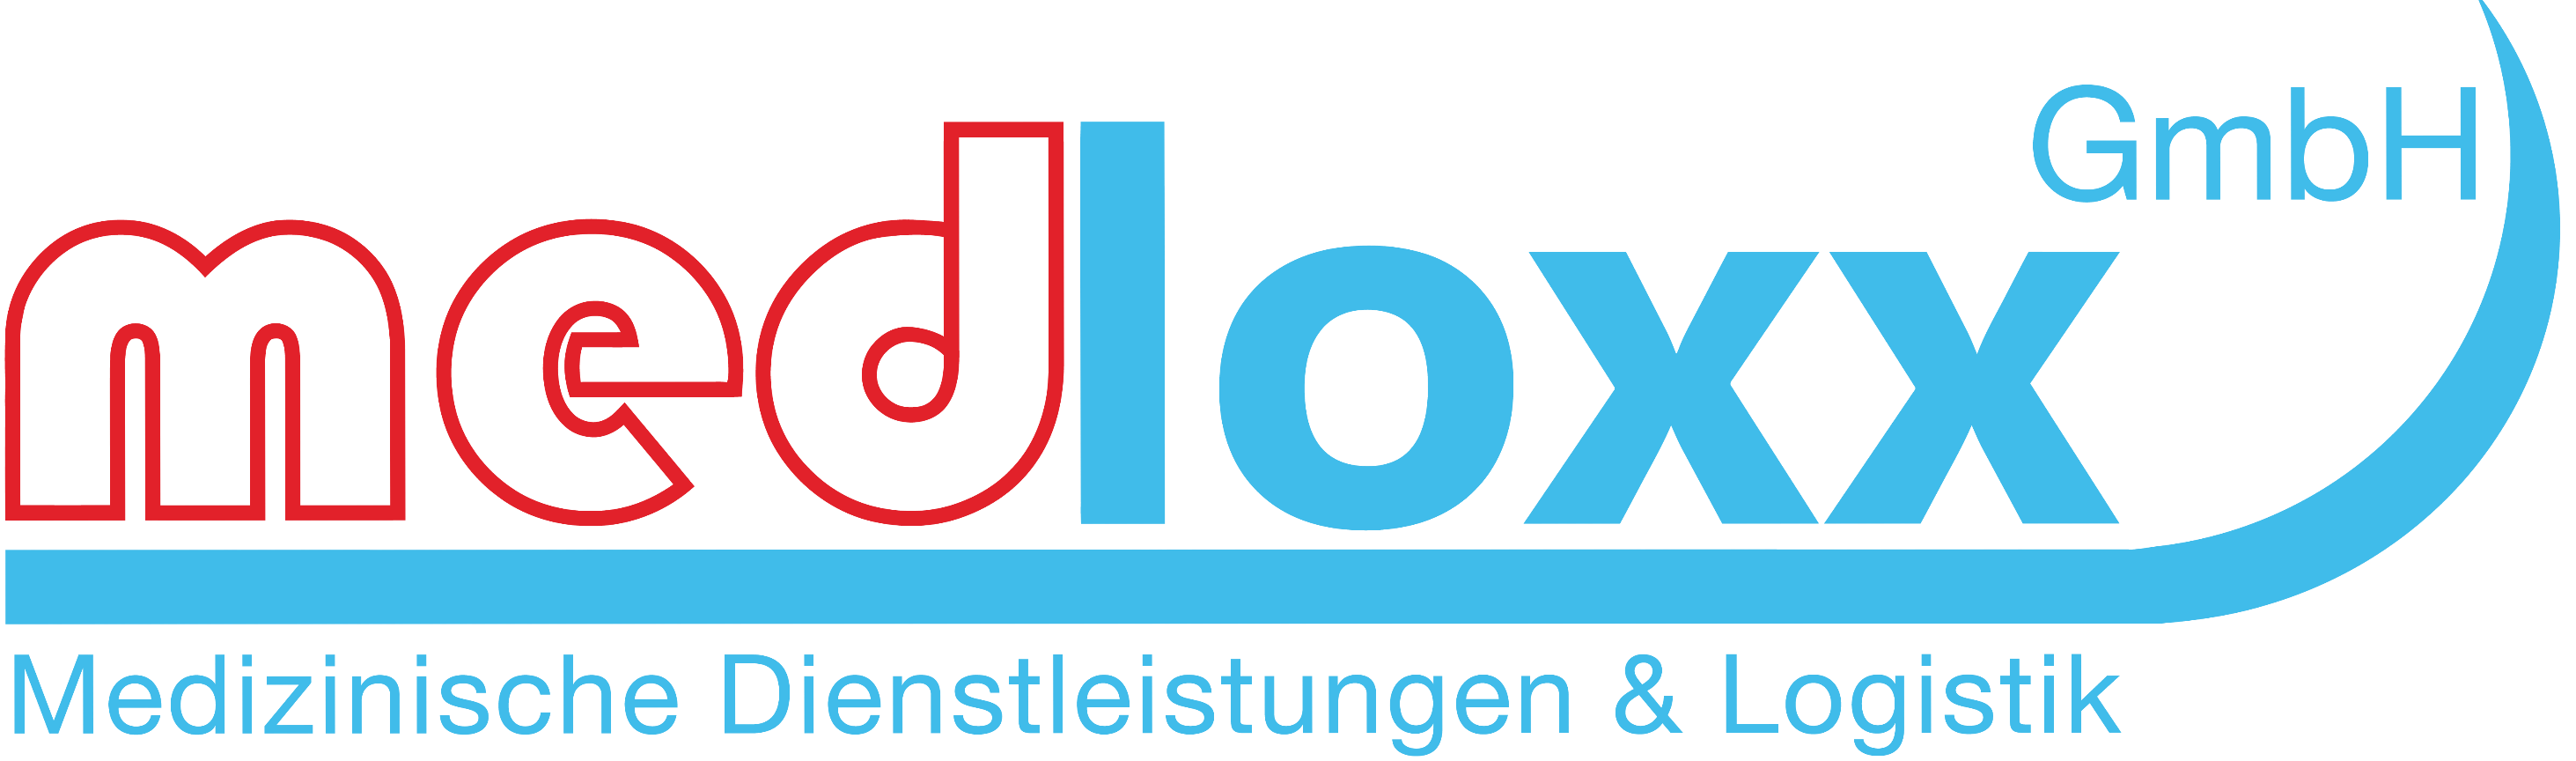 medloxx GmbH